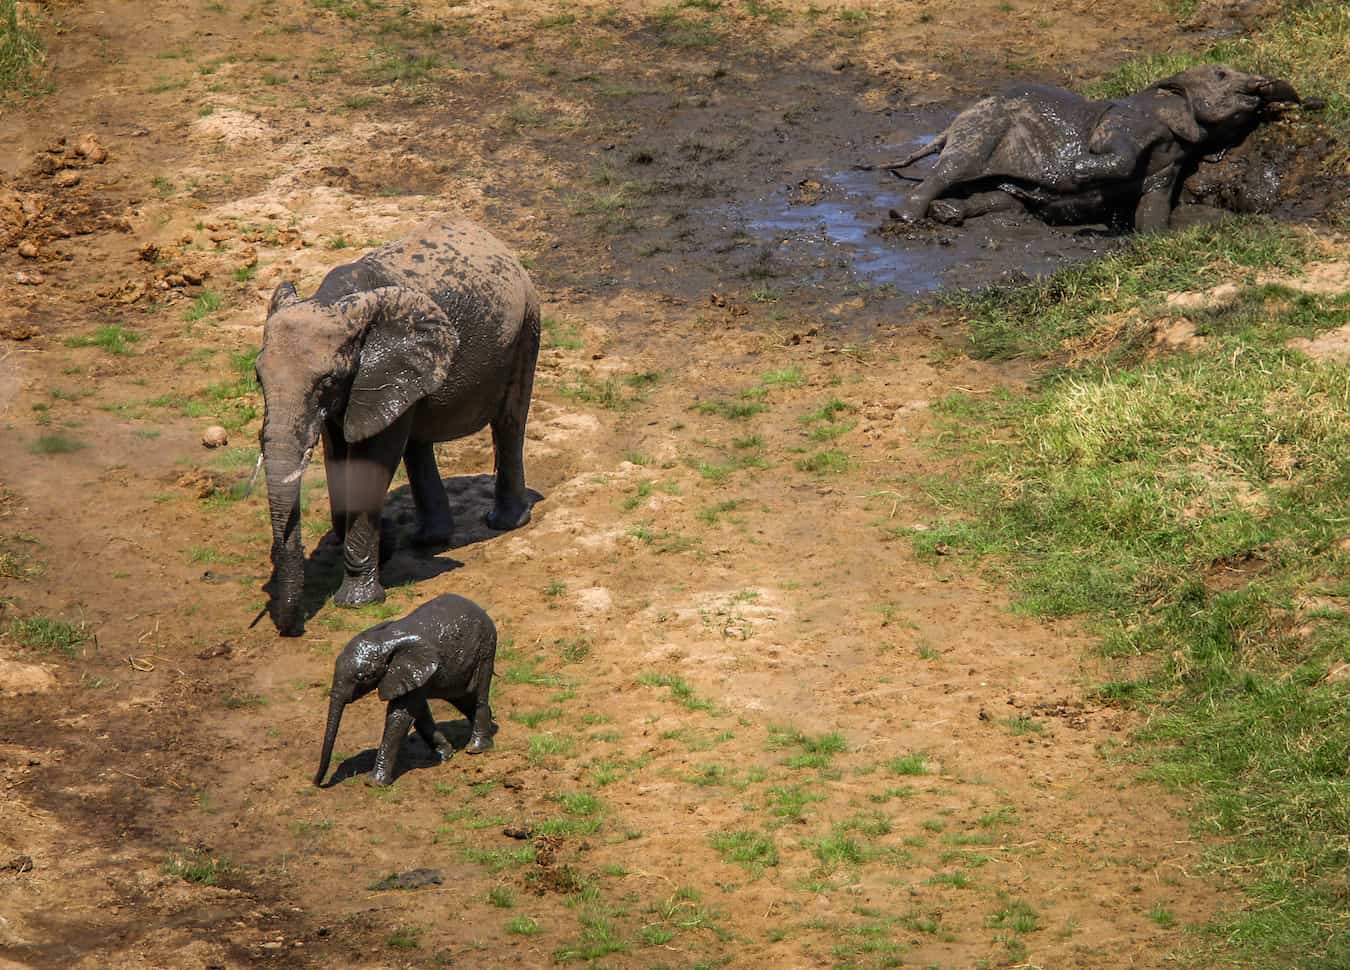 Elephant Mud Bath in Tangarire National Park, Tanzania